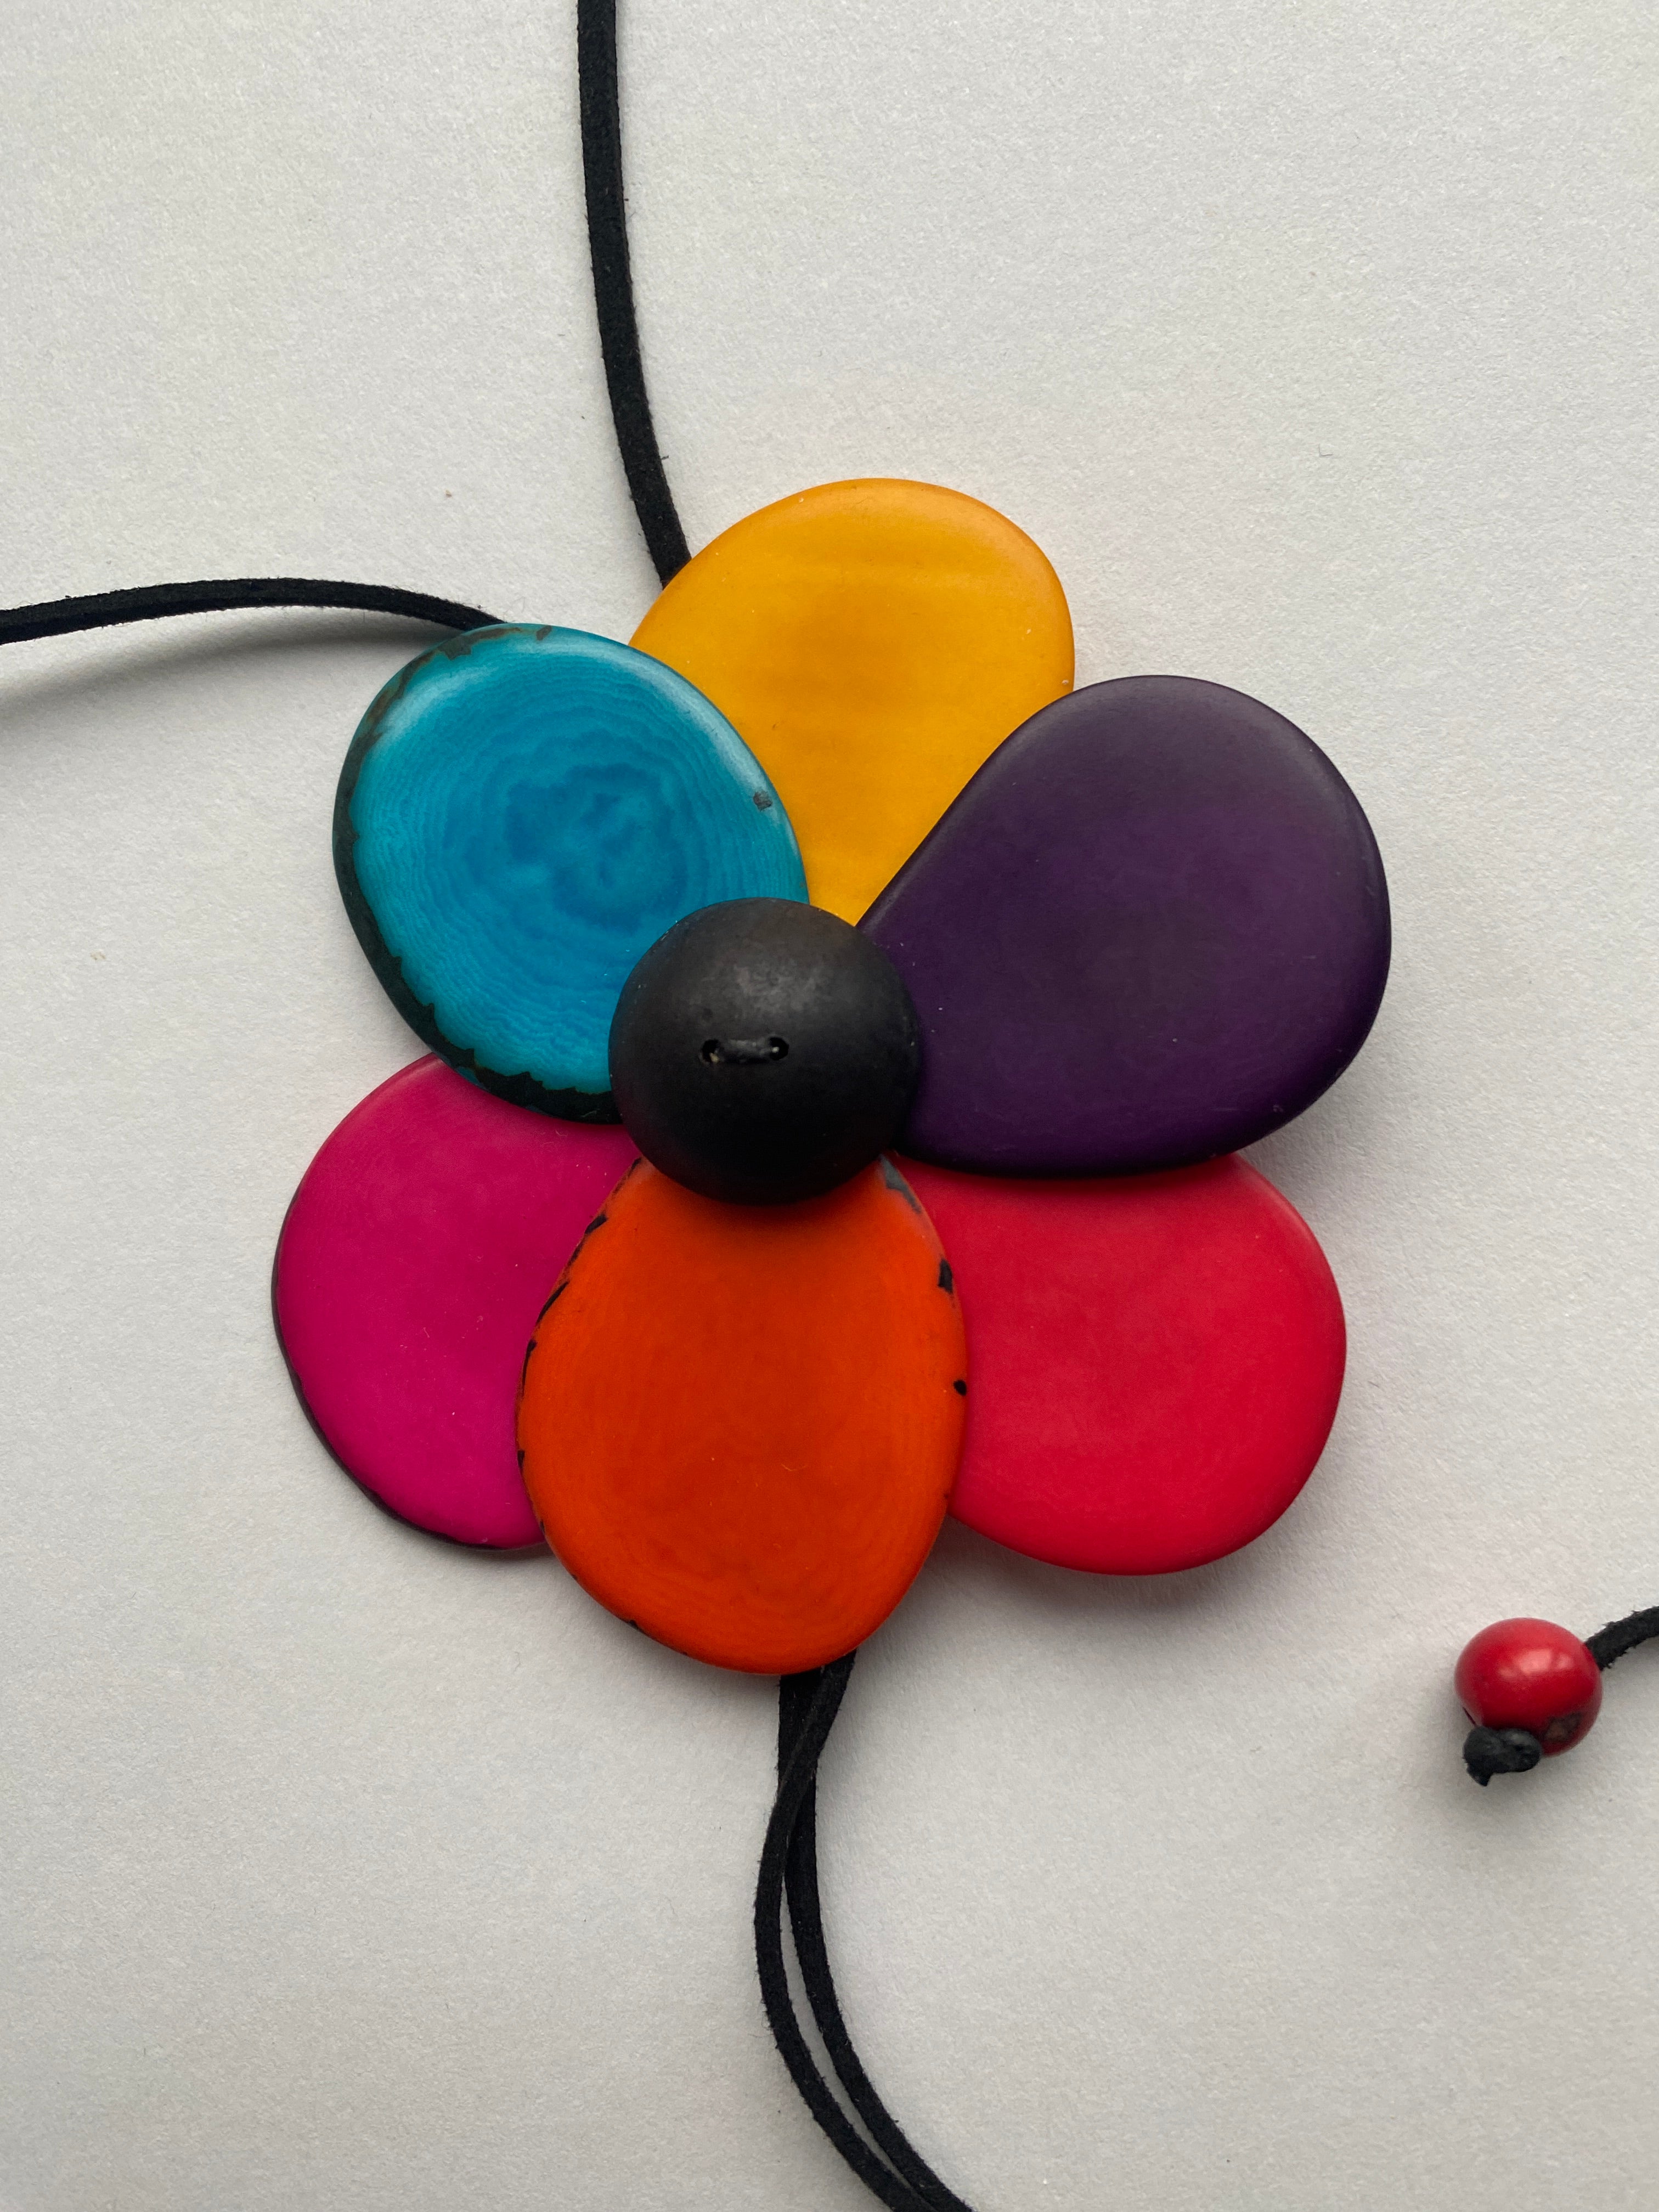 Flower Tagua Necklace - Multicolour